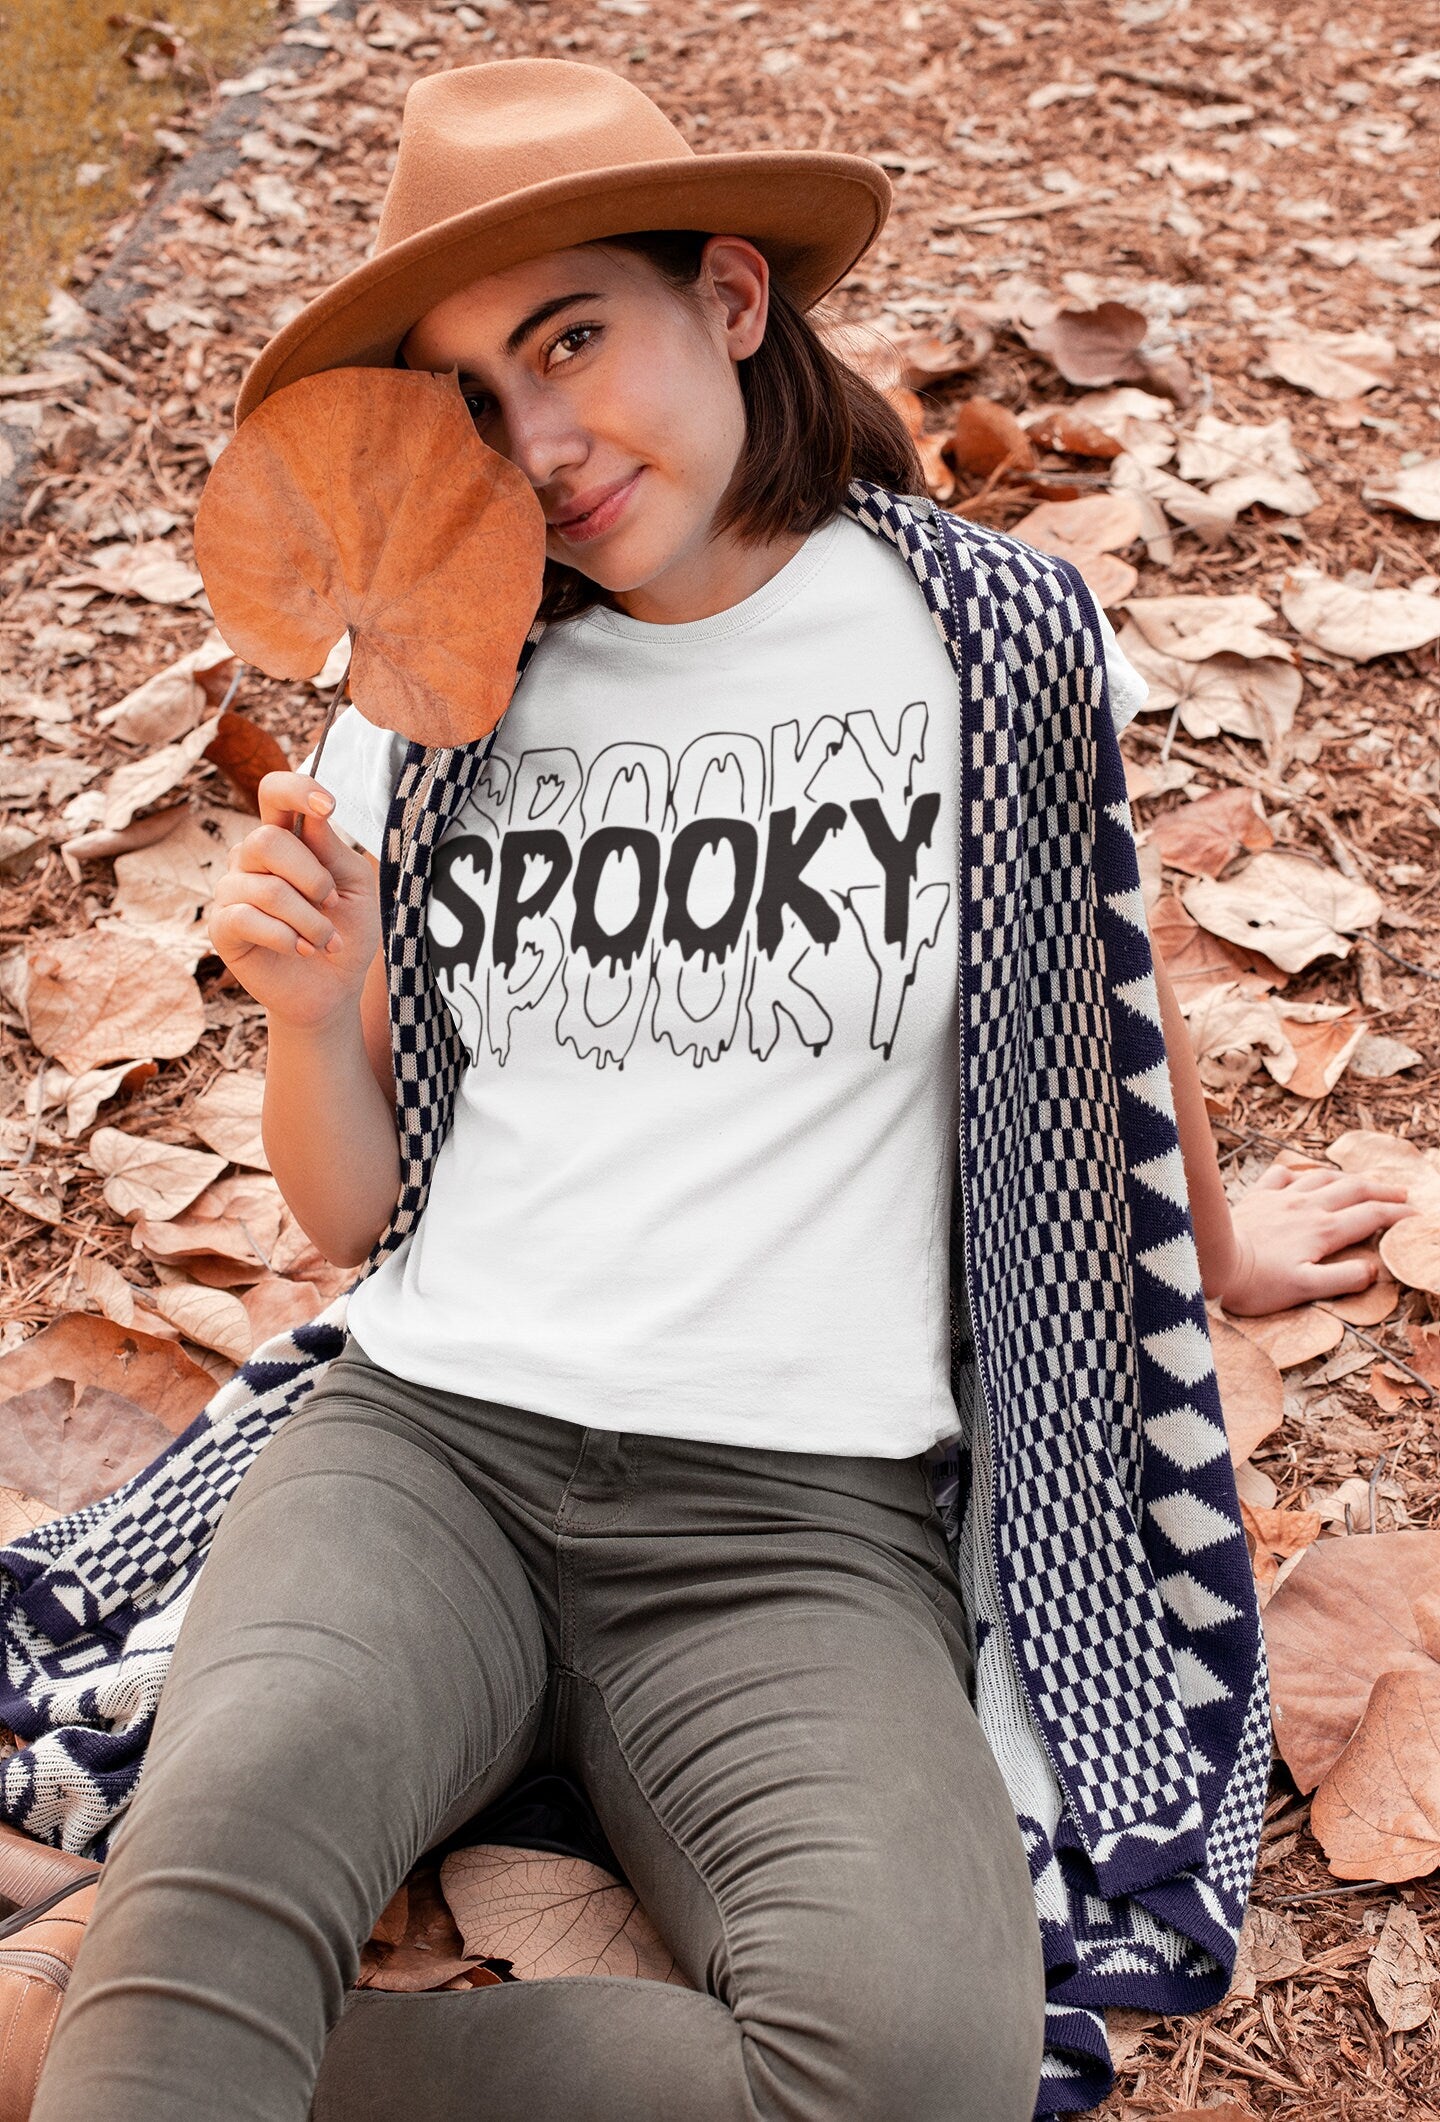 Spooky Halloween Shirt, Spooky Season Shirt, Spooky Vibes Shirt, Halloween Shirt, Halloween Party Shirt, Family Shirts, Unisex Shirt